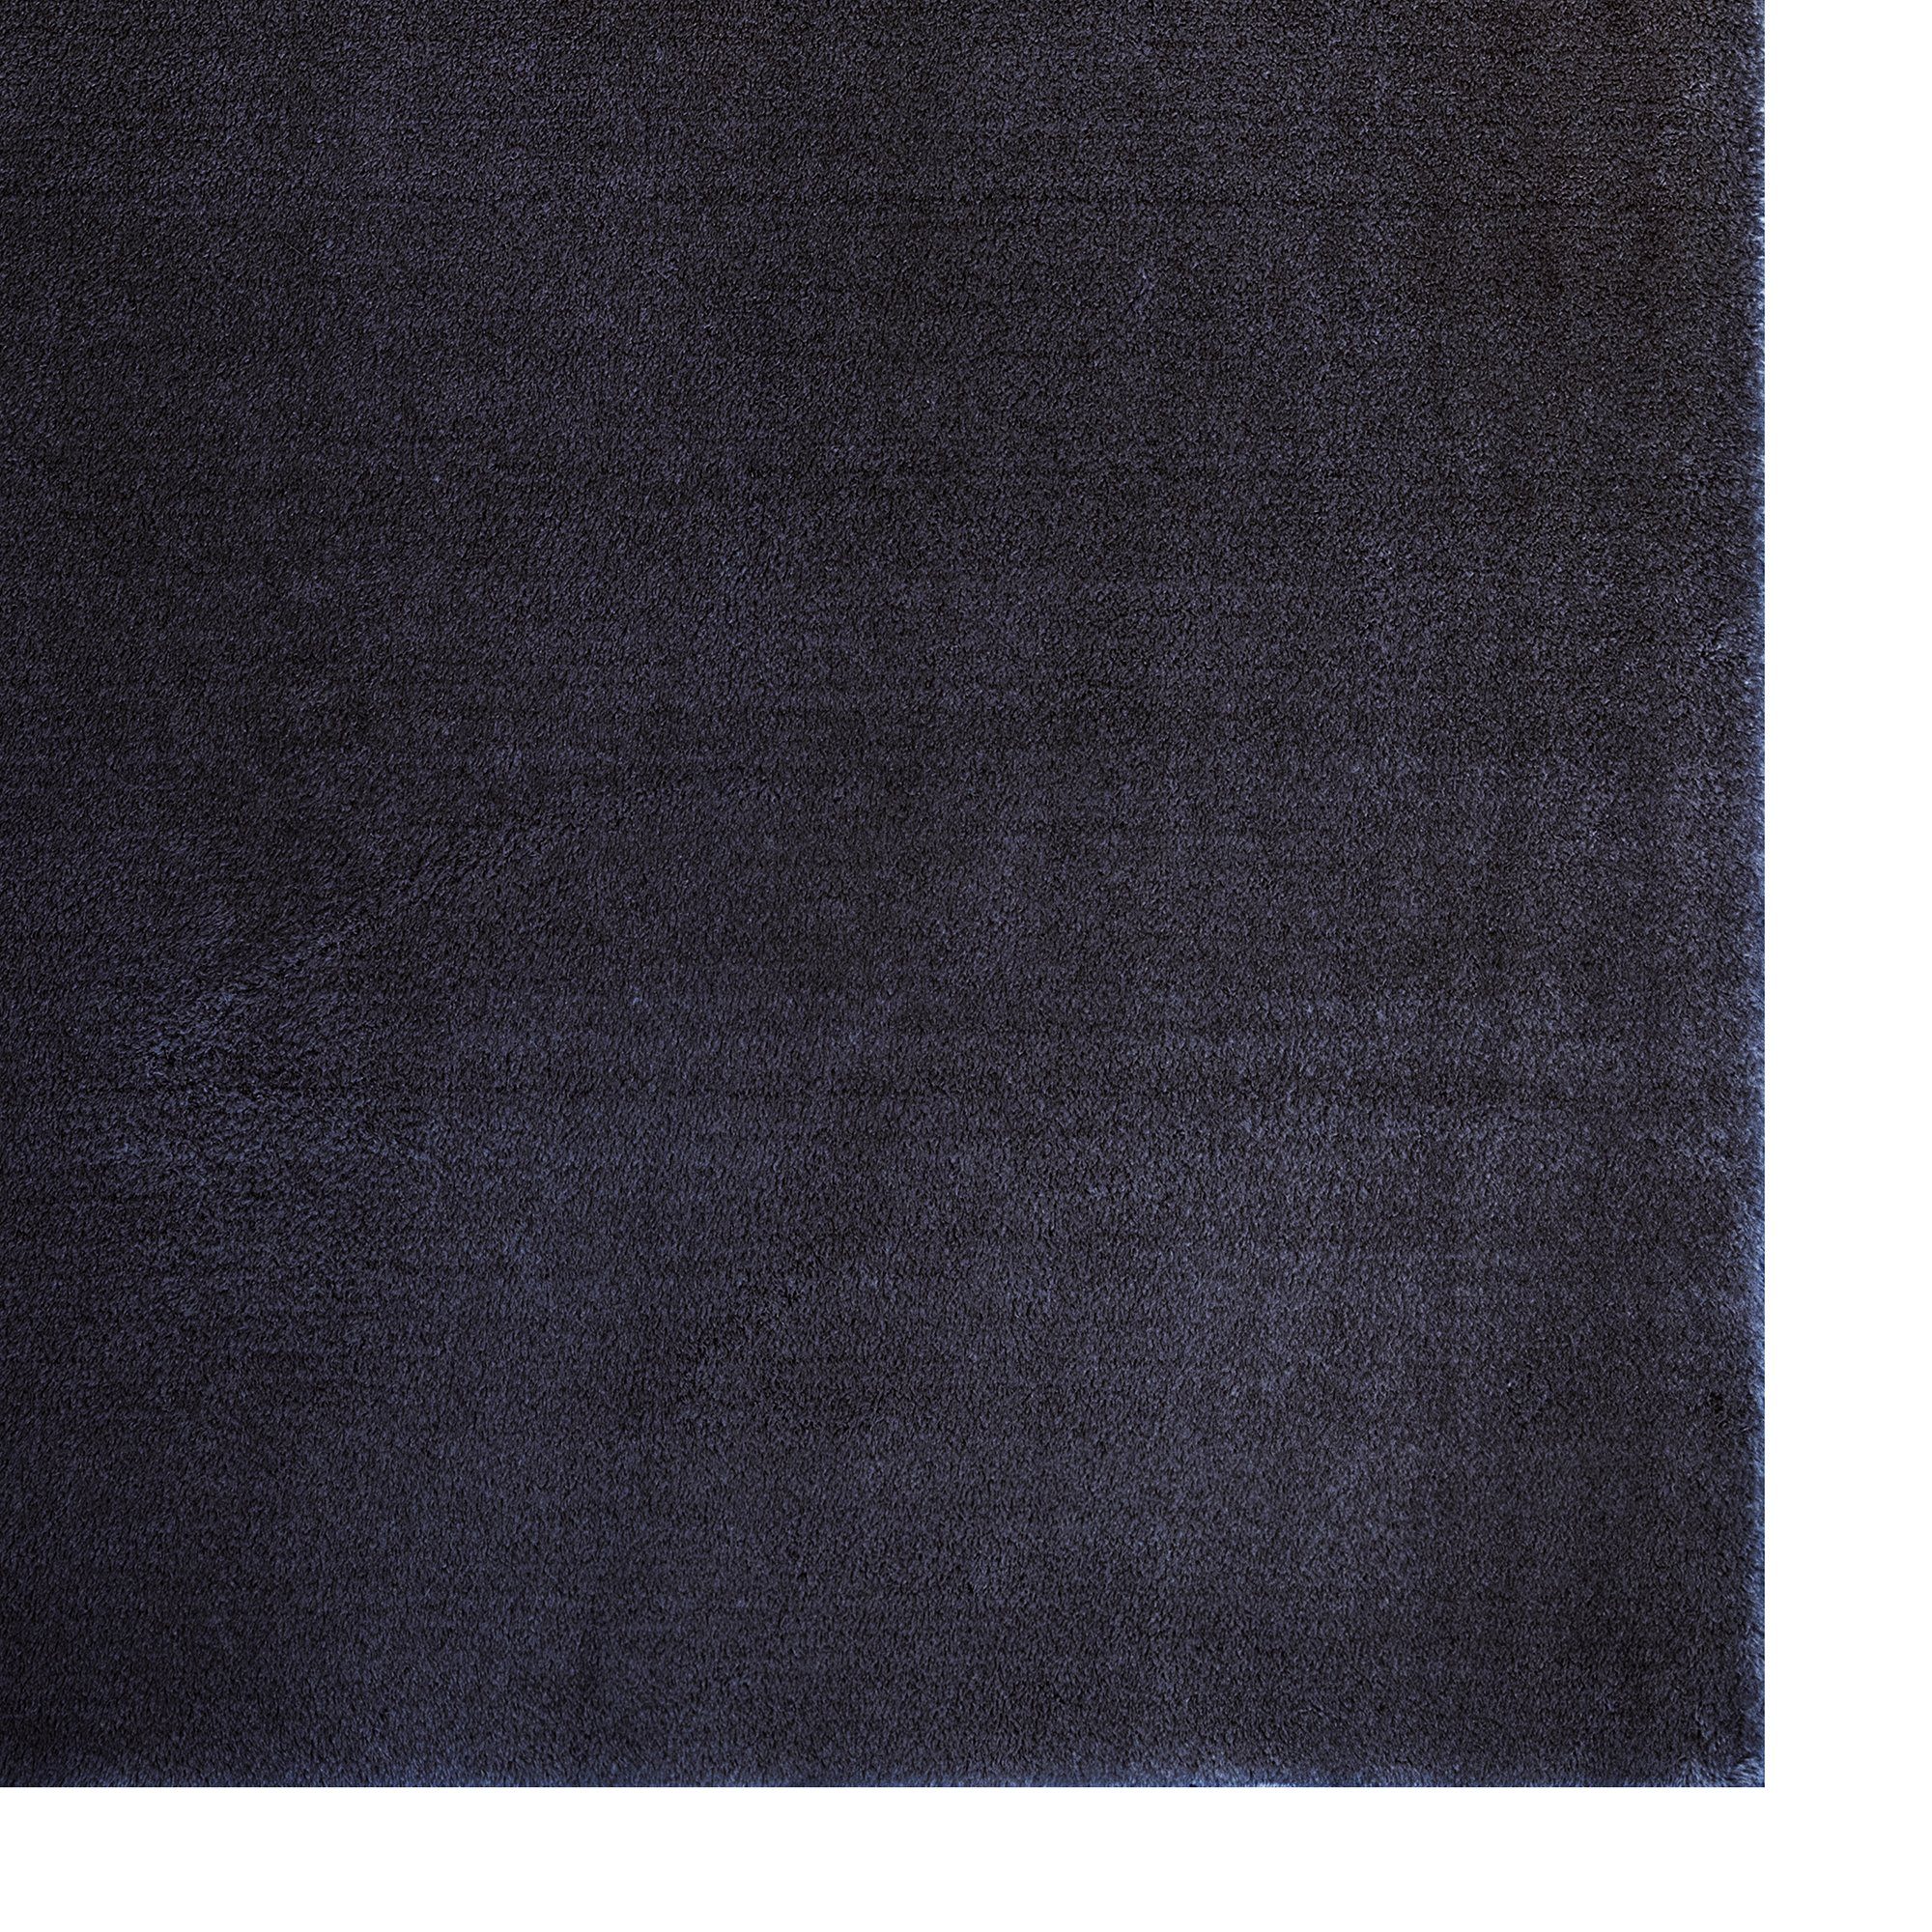 mm, 8 Teppich Kollektion, Einfarbig DarkGrau Küchenteppich Akor Waschbar Teppich Teppia TEPPIA, Höhe: Rutschfest